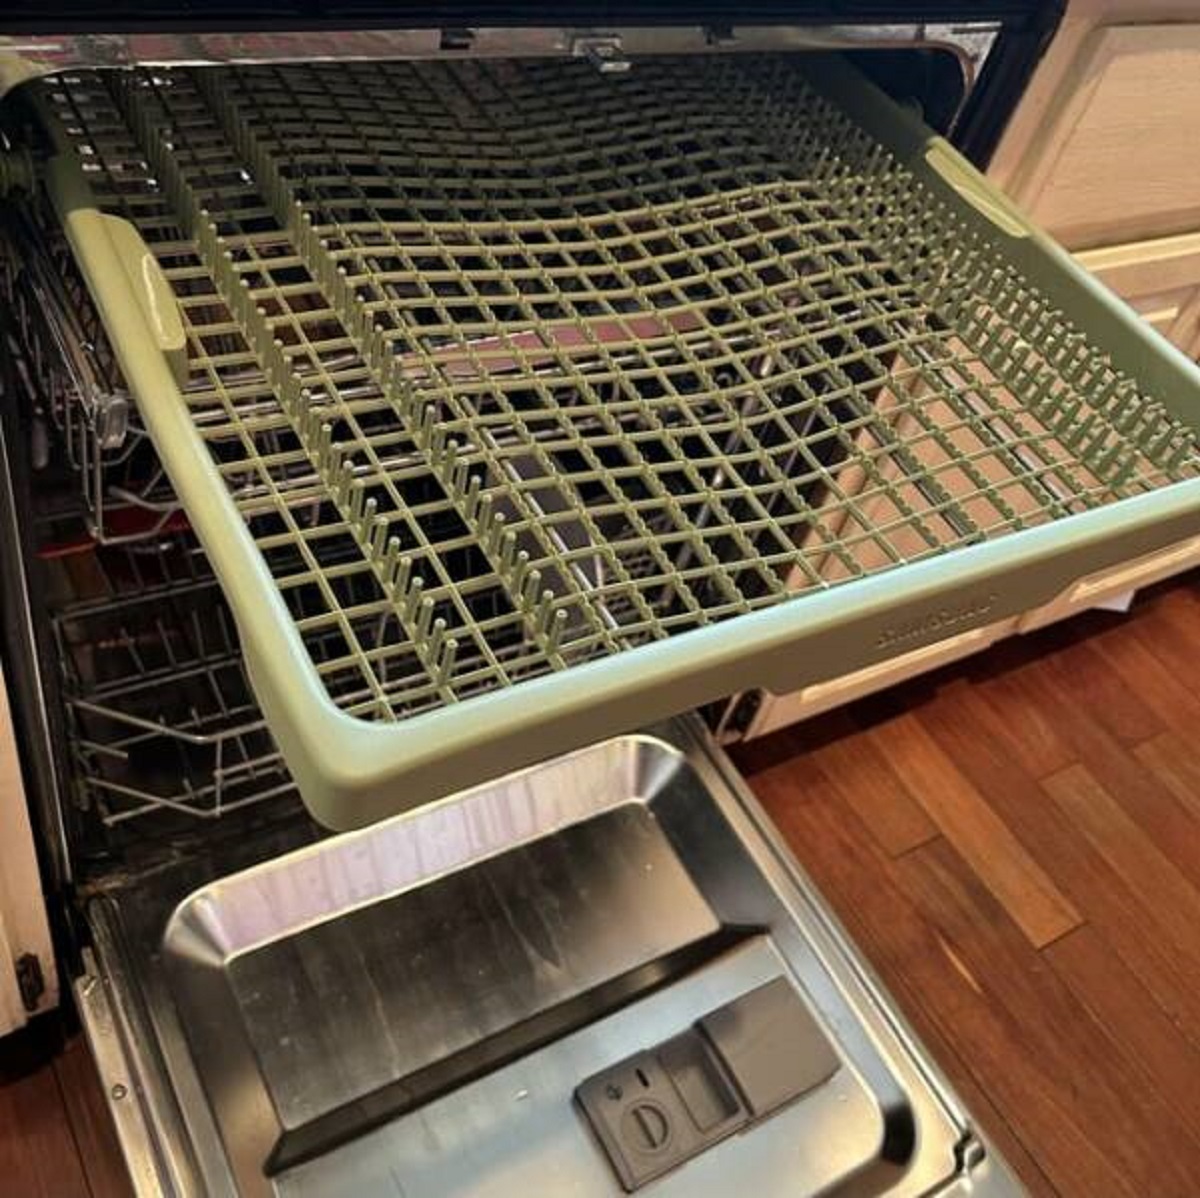 "Samsung dishwasher rack turned green overnight"